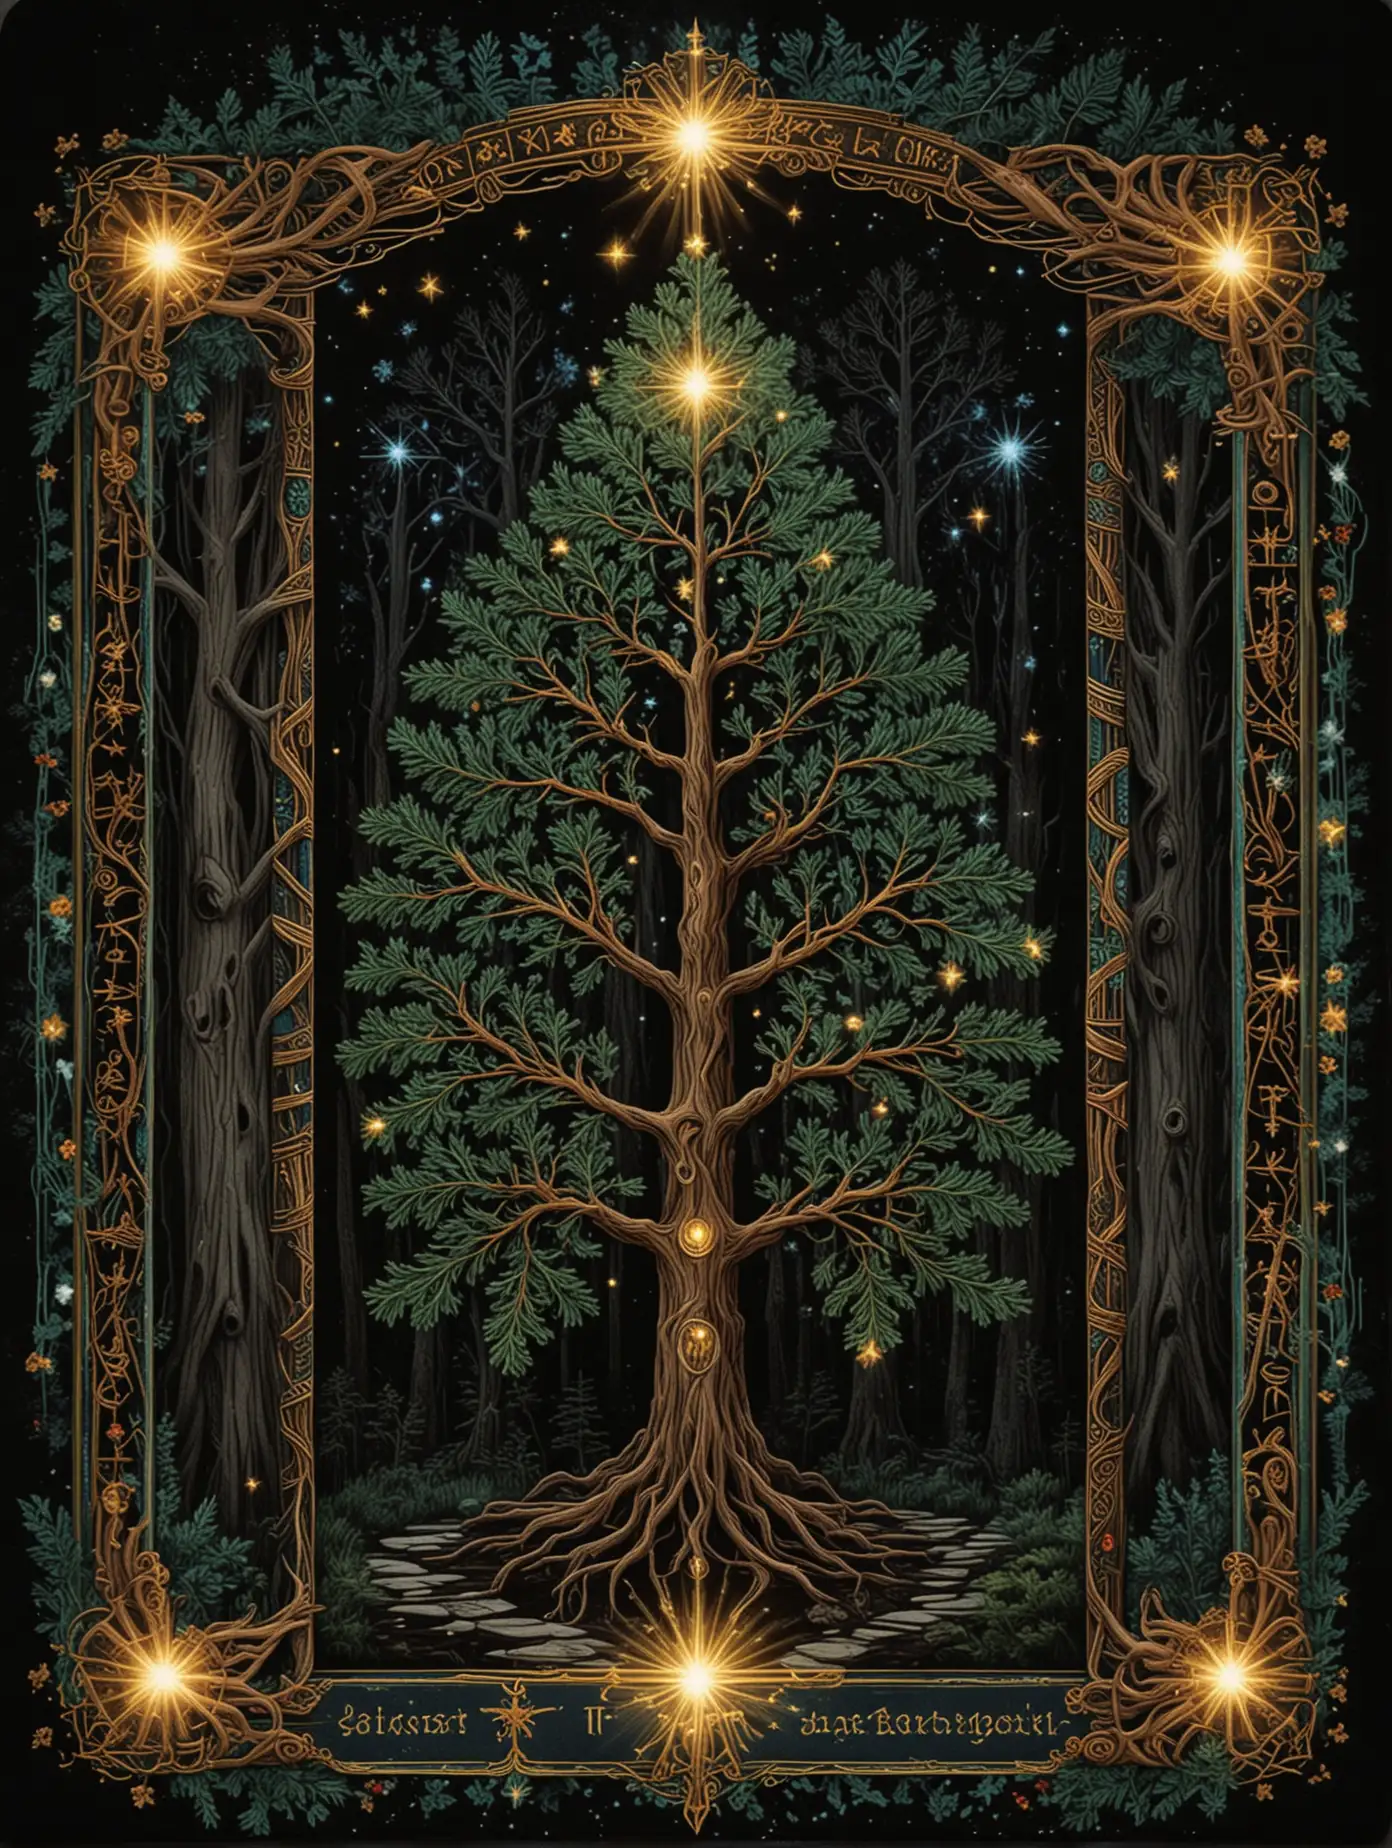 Slavic-Style-Tarot-Card-Illuminated-Fir-Tree-in-Dark-Forest